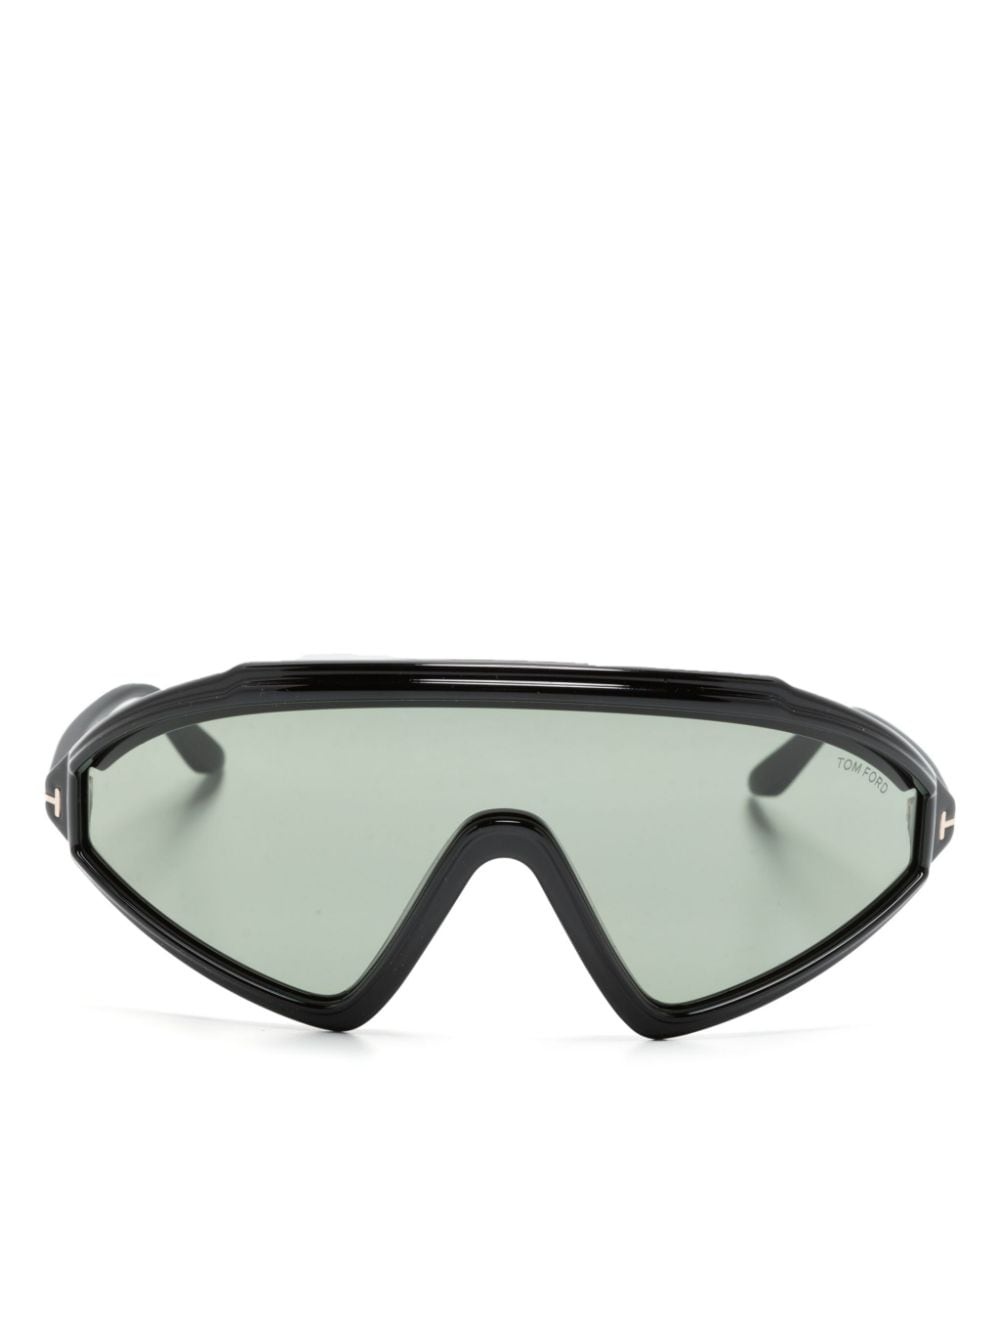 Lorna shield-frame sunglasses - 1